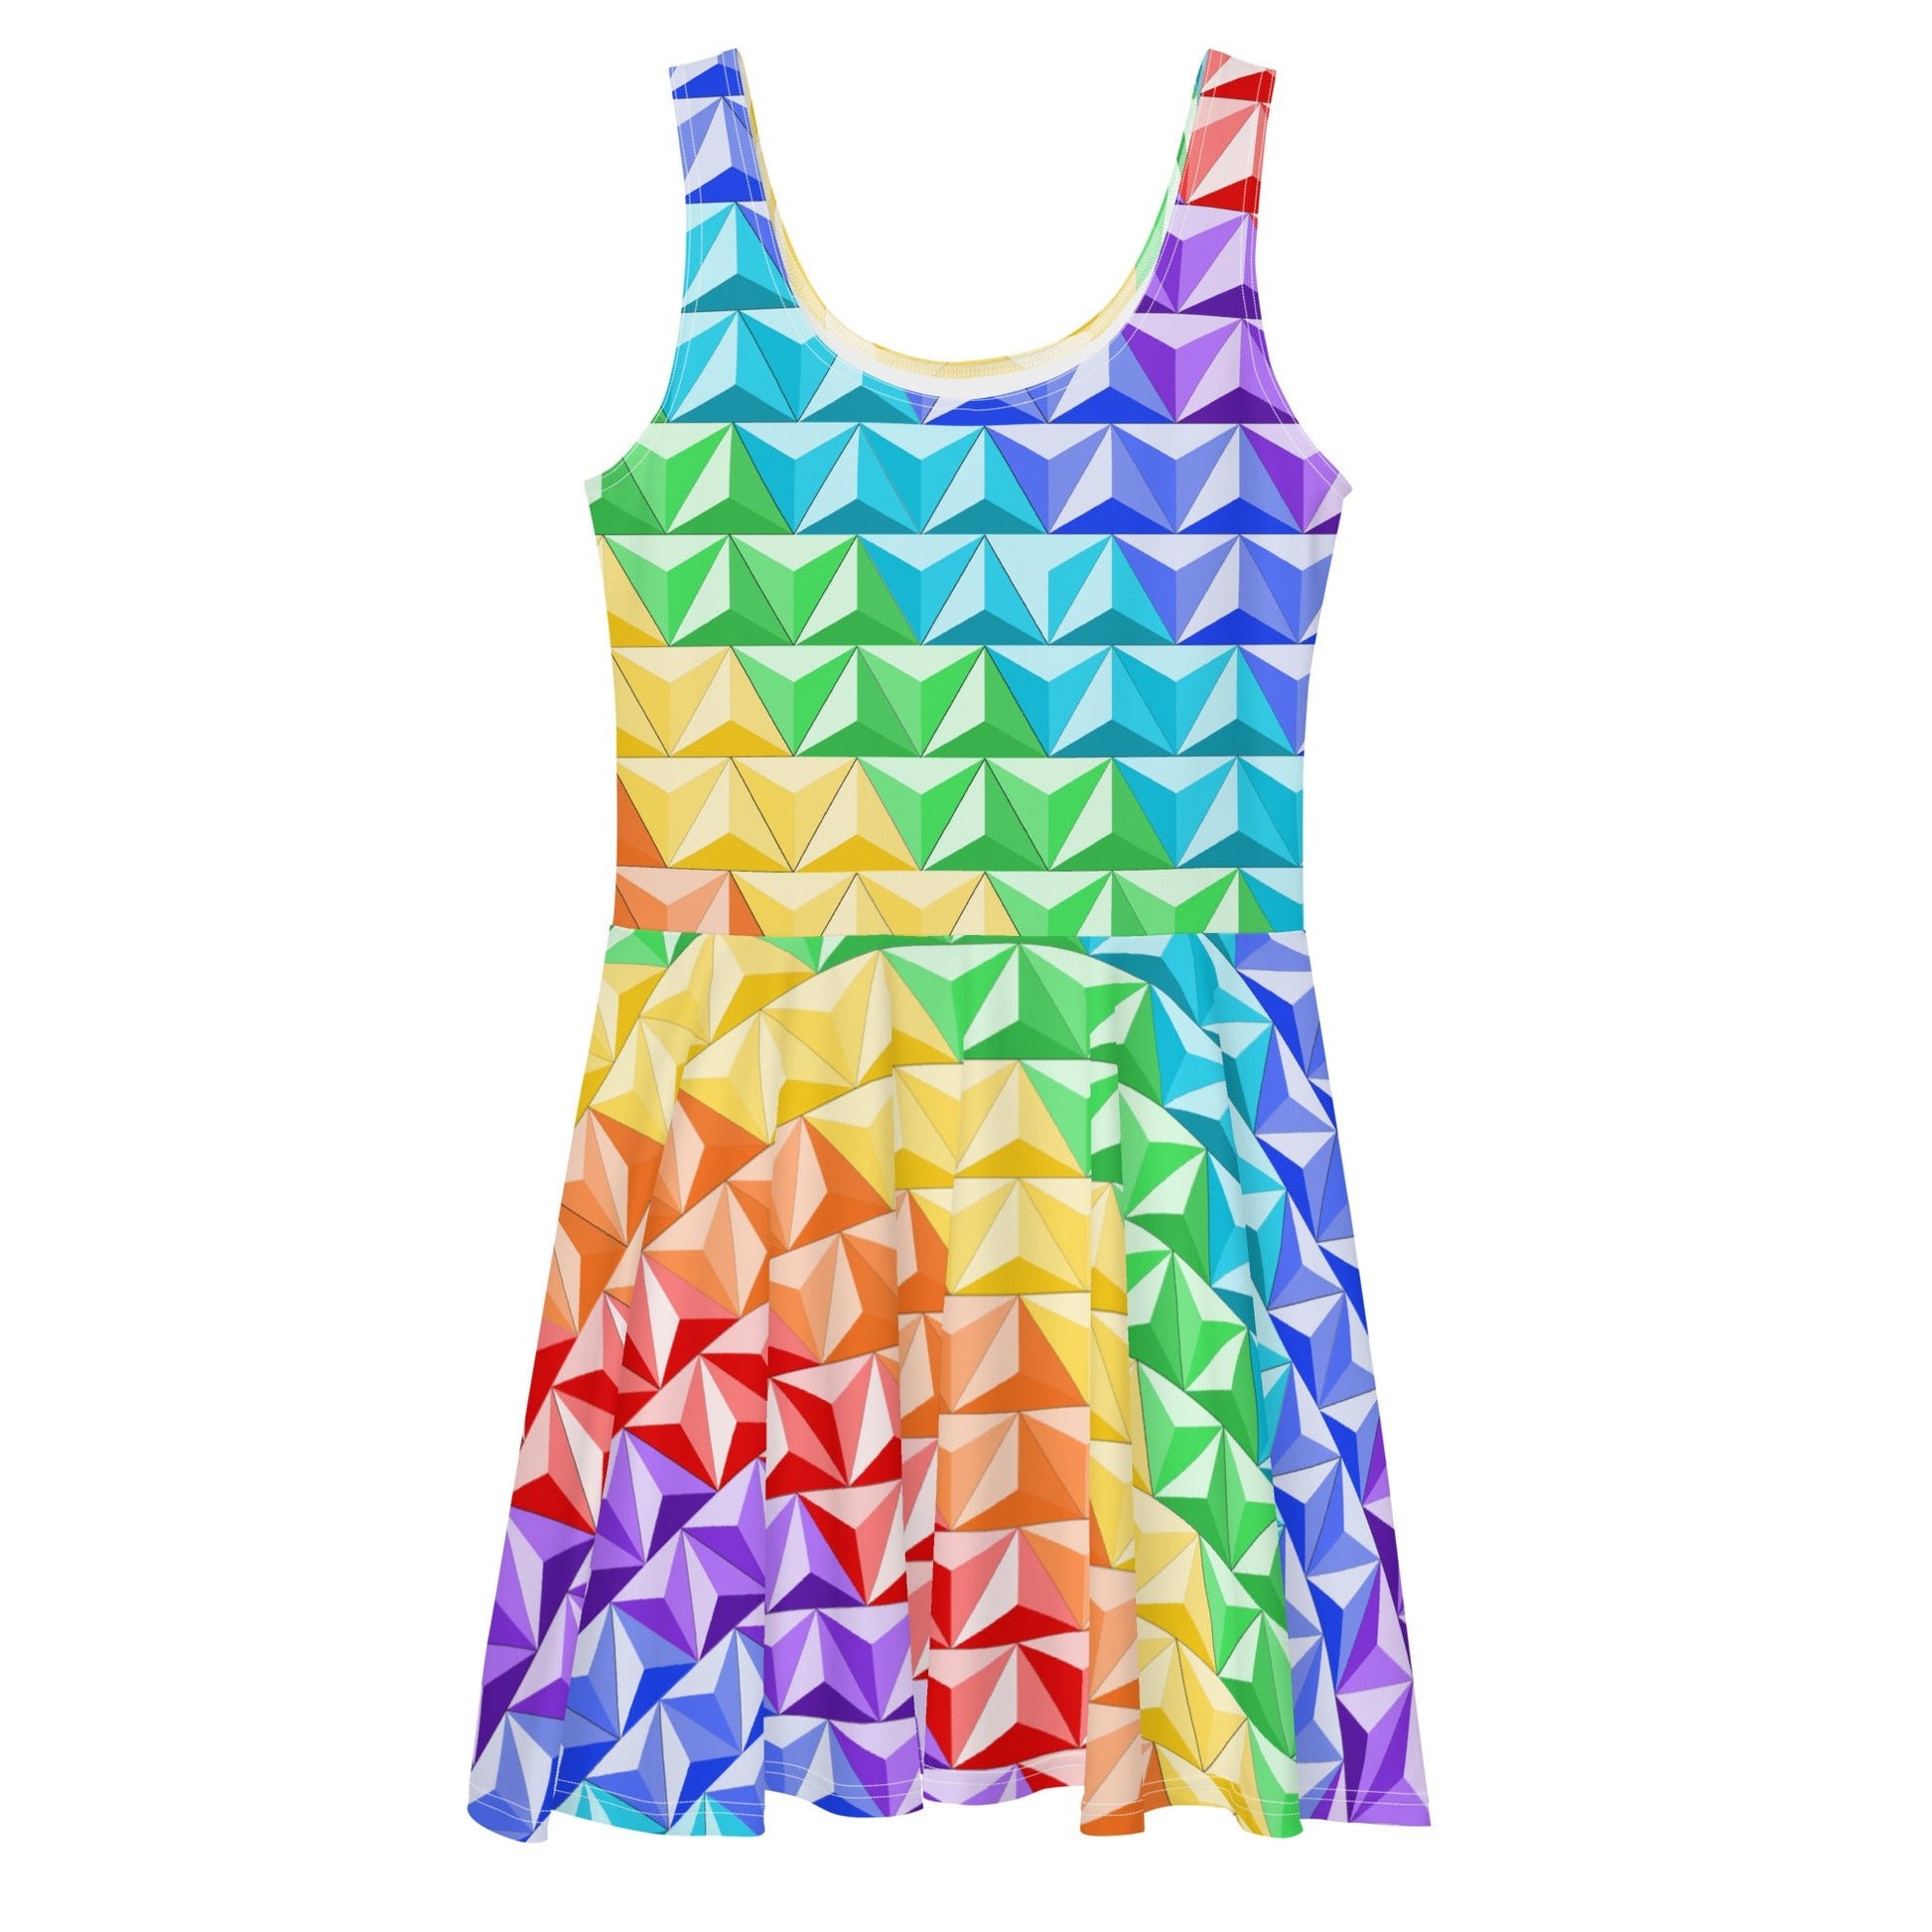 Rainbow World of Tomorrow Skater Dress active wearcalifornia adventureclothing#tag4##tag5##tag6#